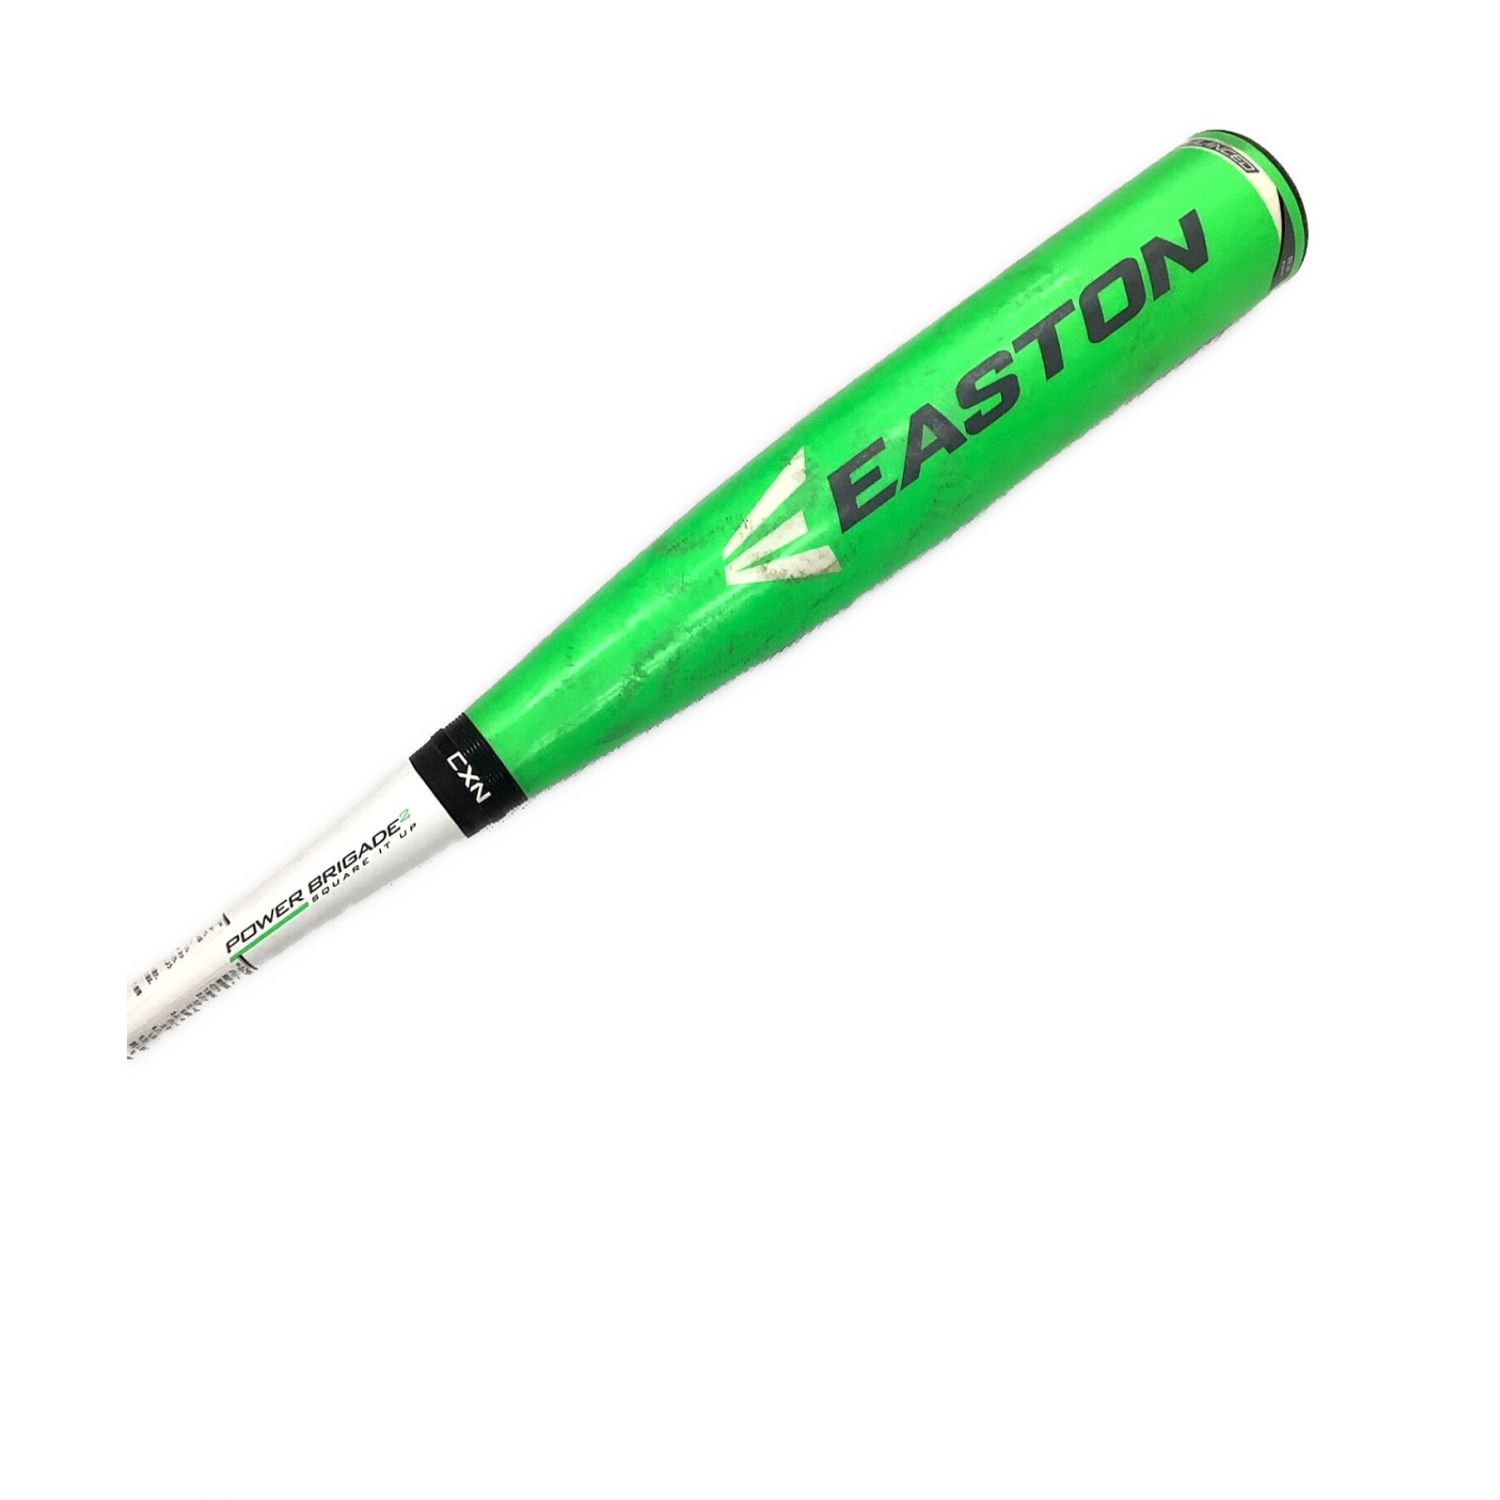 Easton (イーストン) 軟式バット 83cm 720g平均 グリーン×ホワイト 